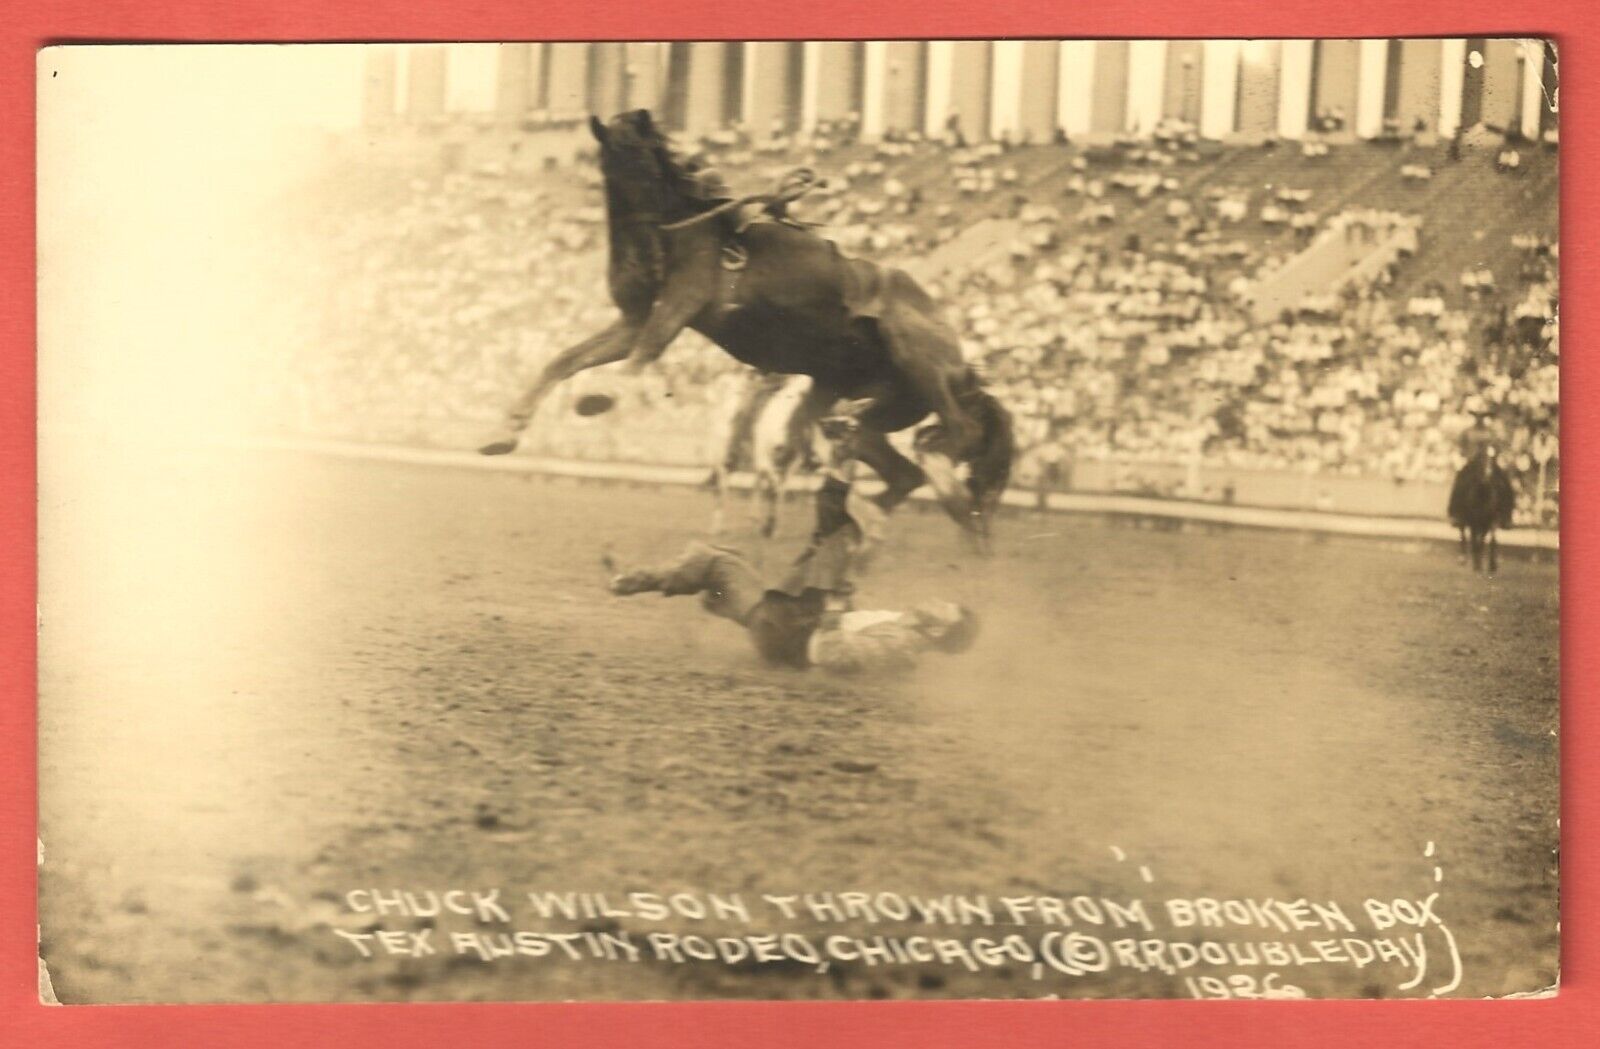 CHUCK WILSON thrown from BROKEN BOX - 1926 TEX AUSTIN RODEO, CHICAGO - Postcard